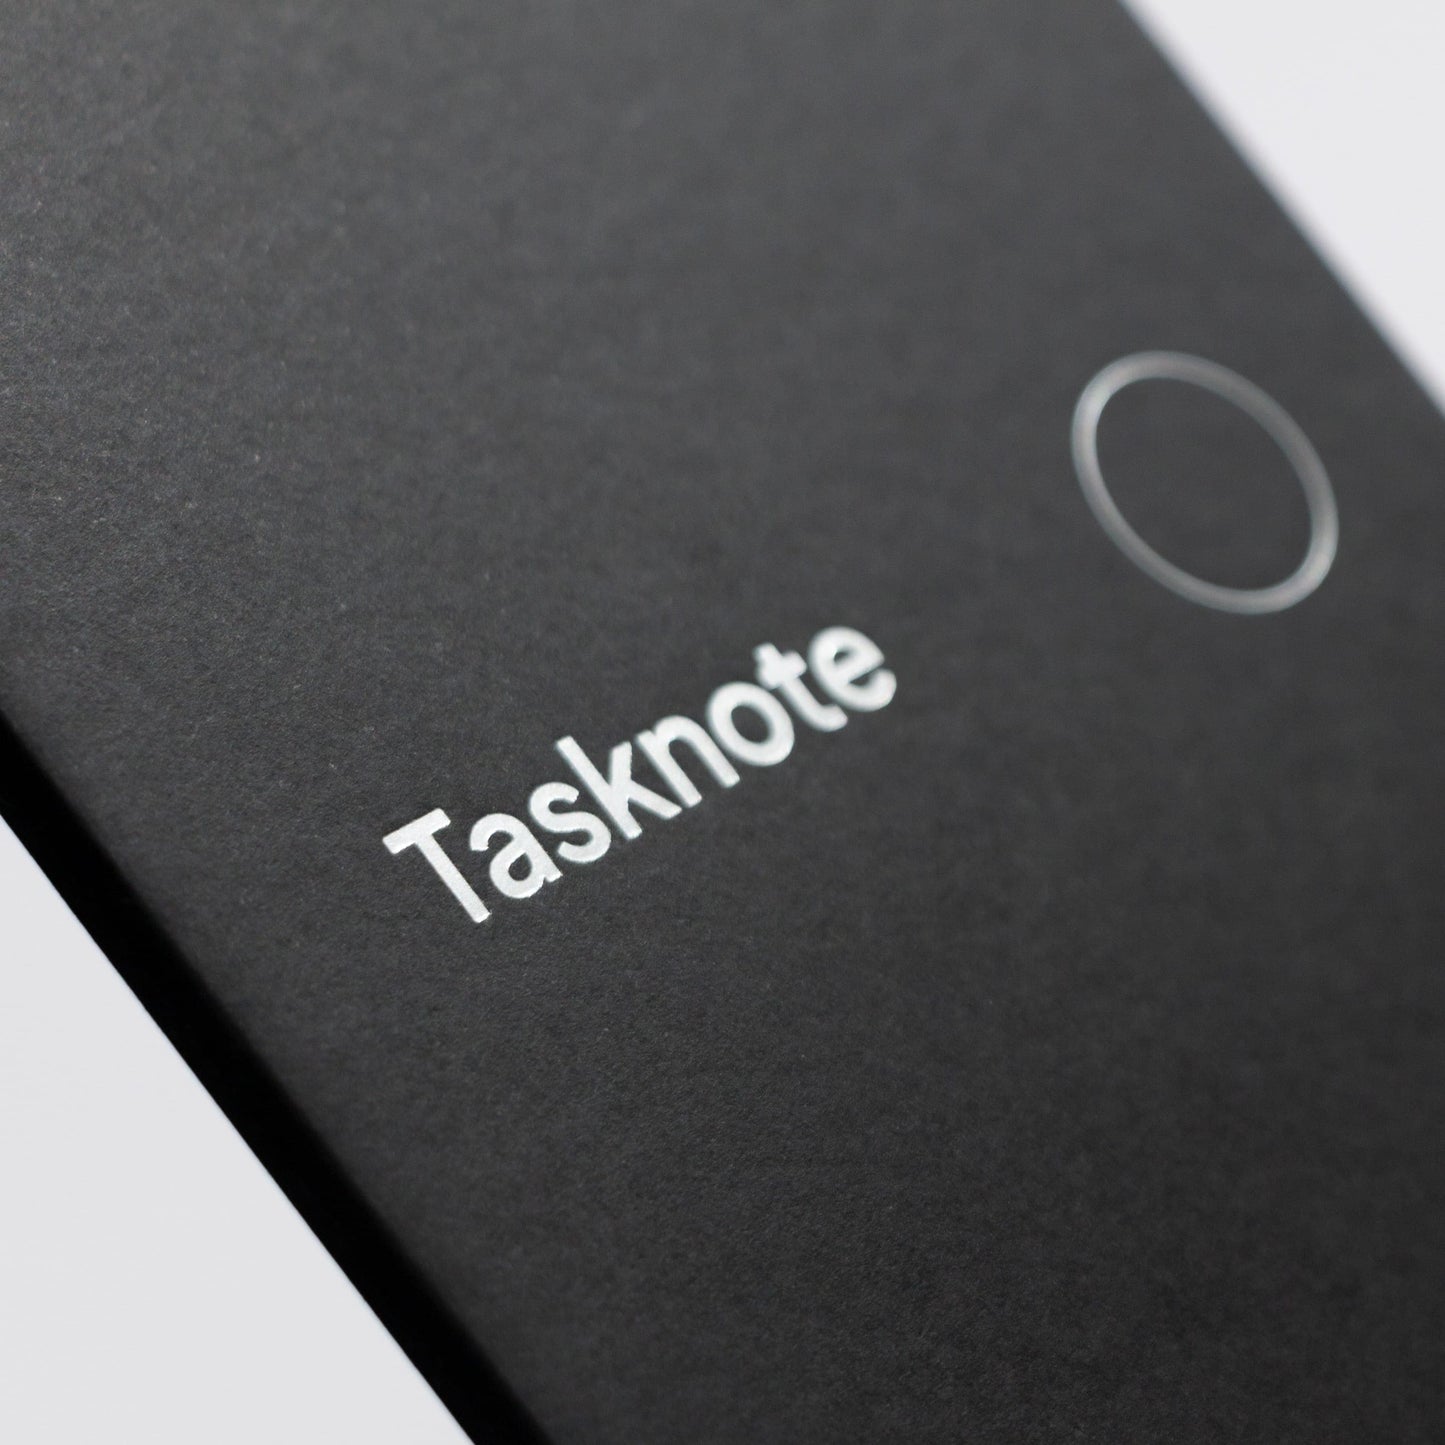 Tasknote